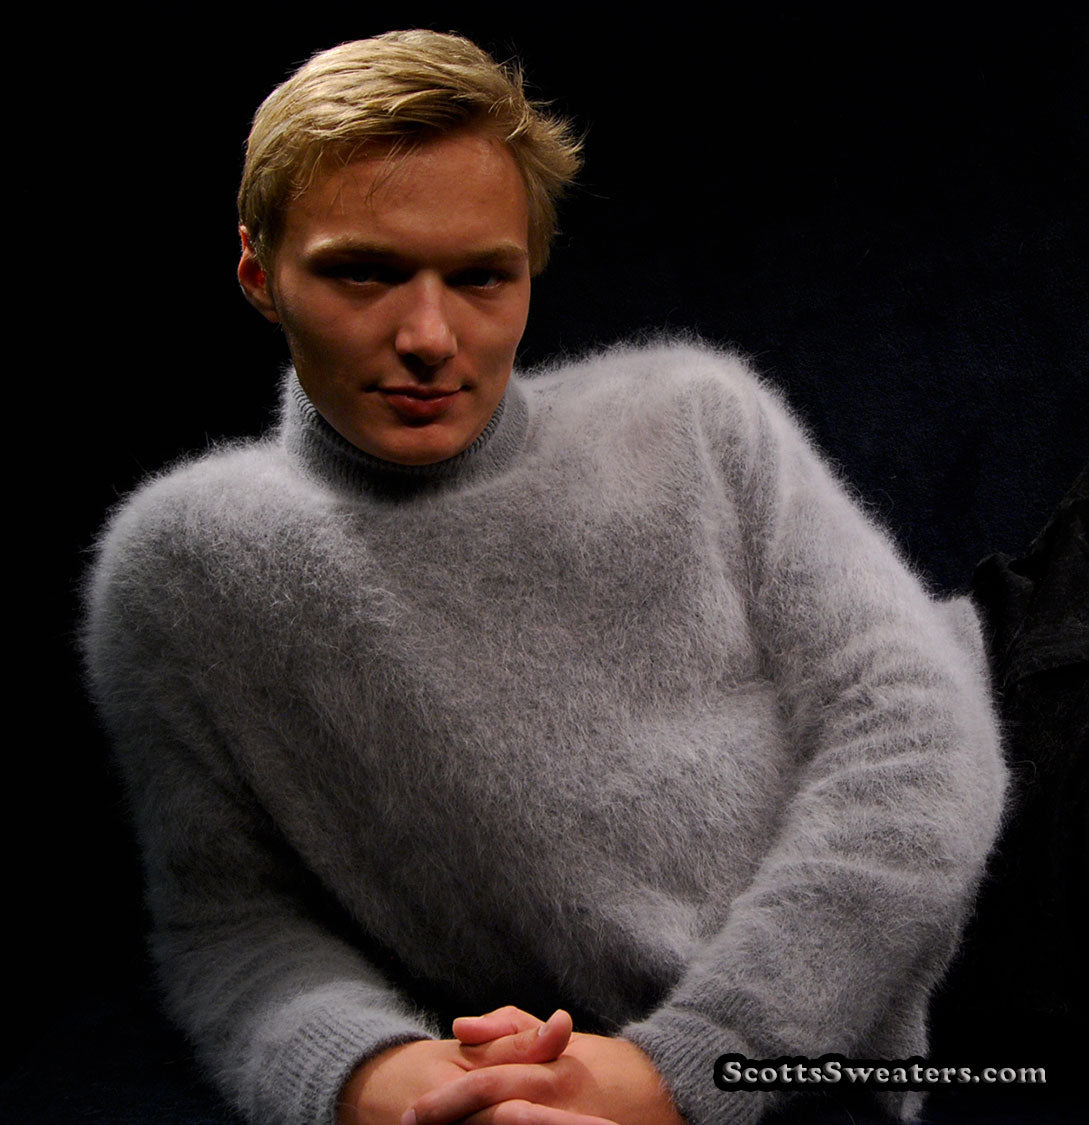 611-005T Men's Ultra-Soft Angora Turtleneck Sweater